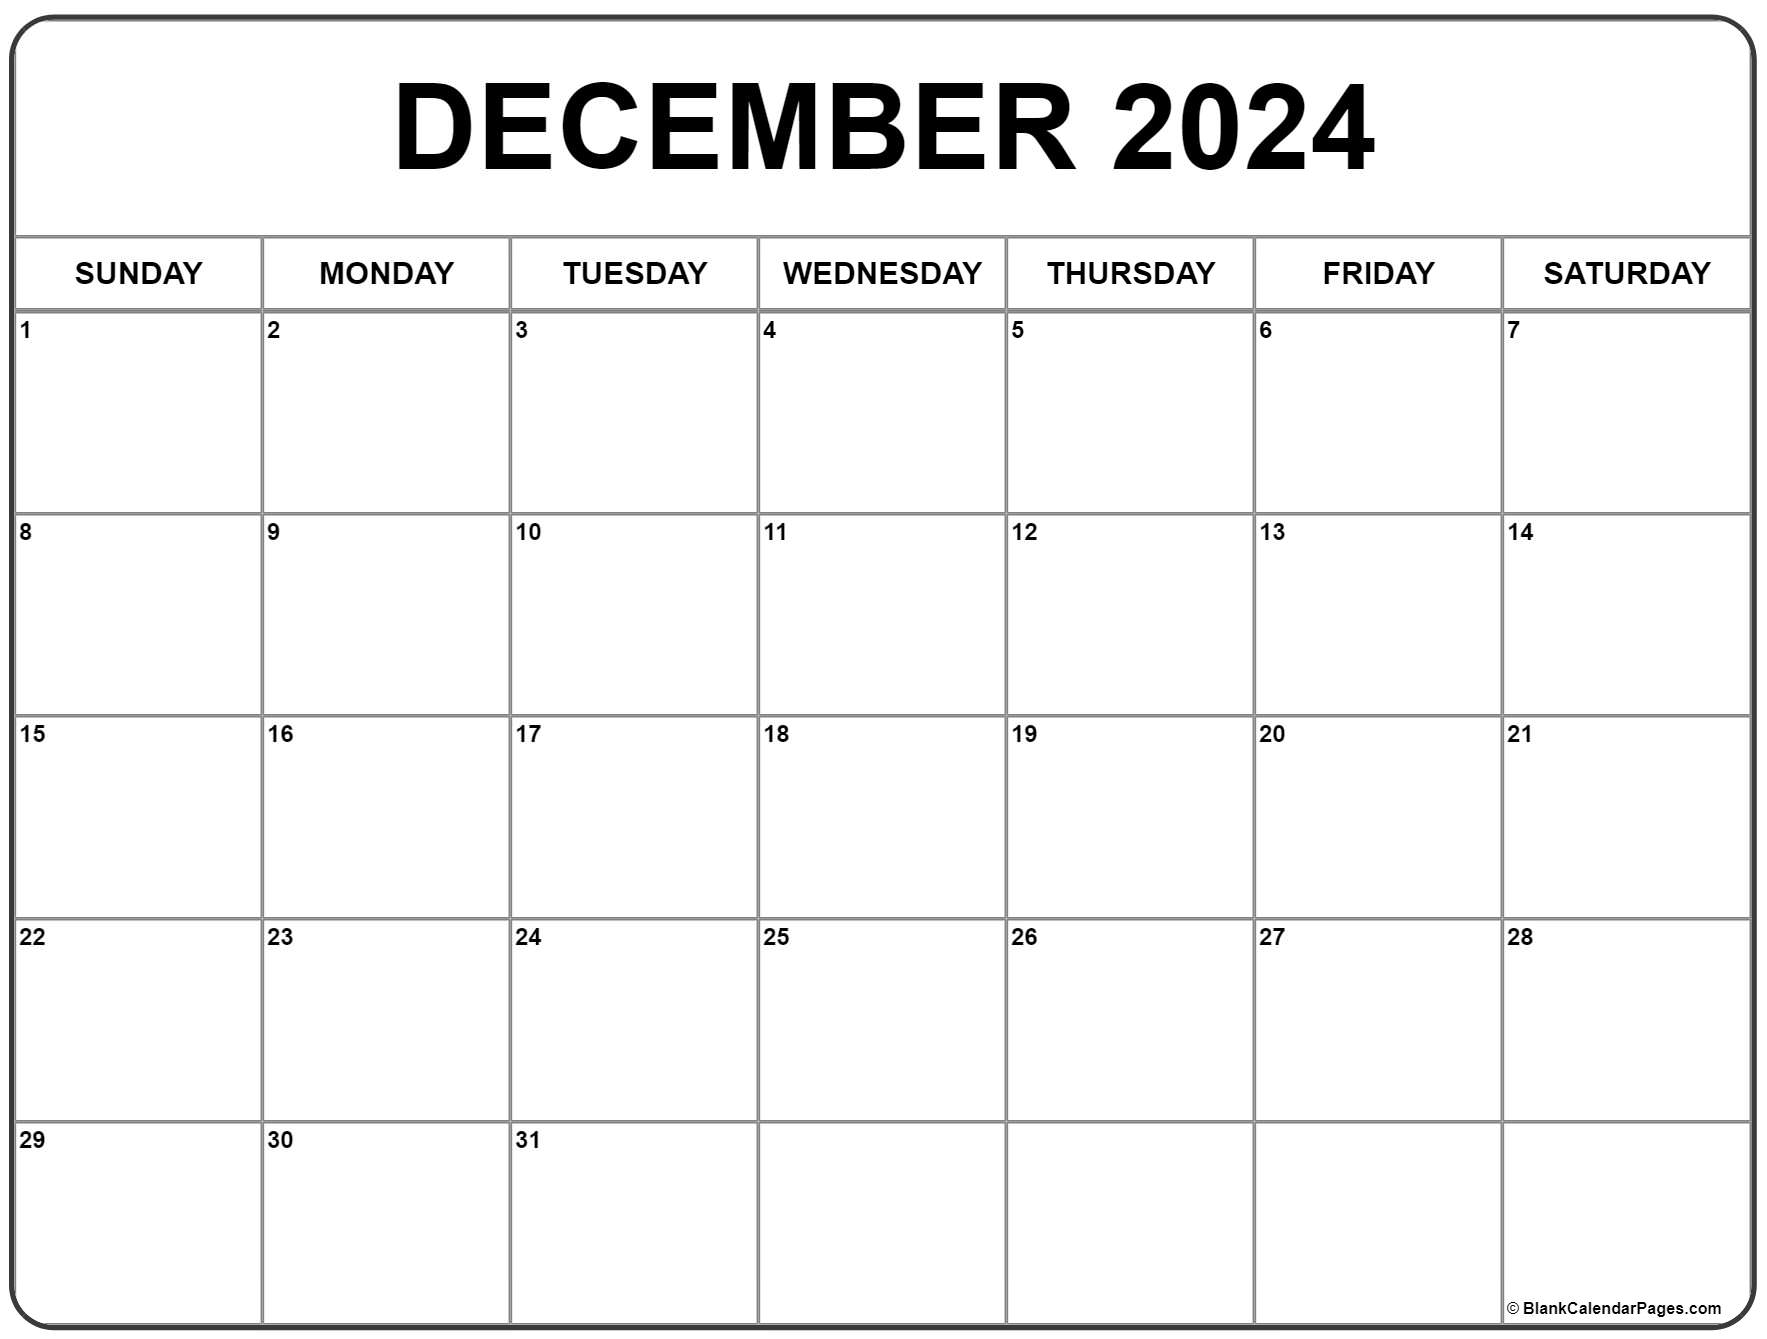 Dec 2022 Printable Calendar December 2022 Calendar | Free Printable Calendar Templates